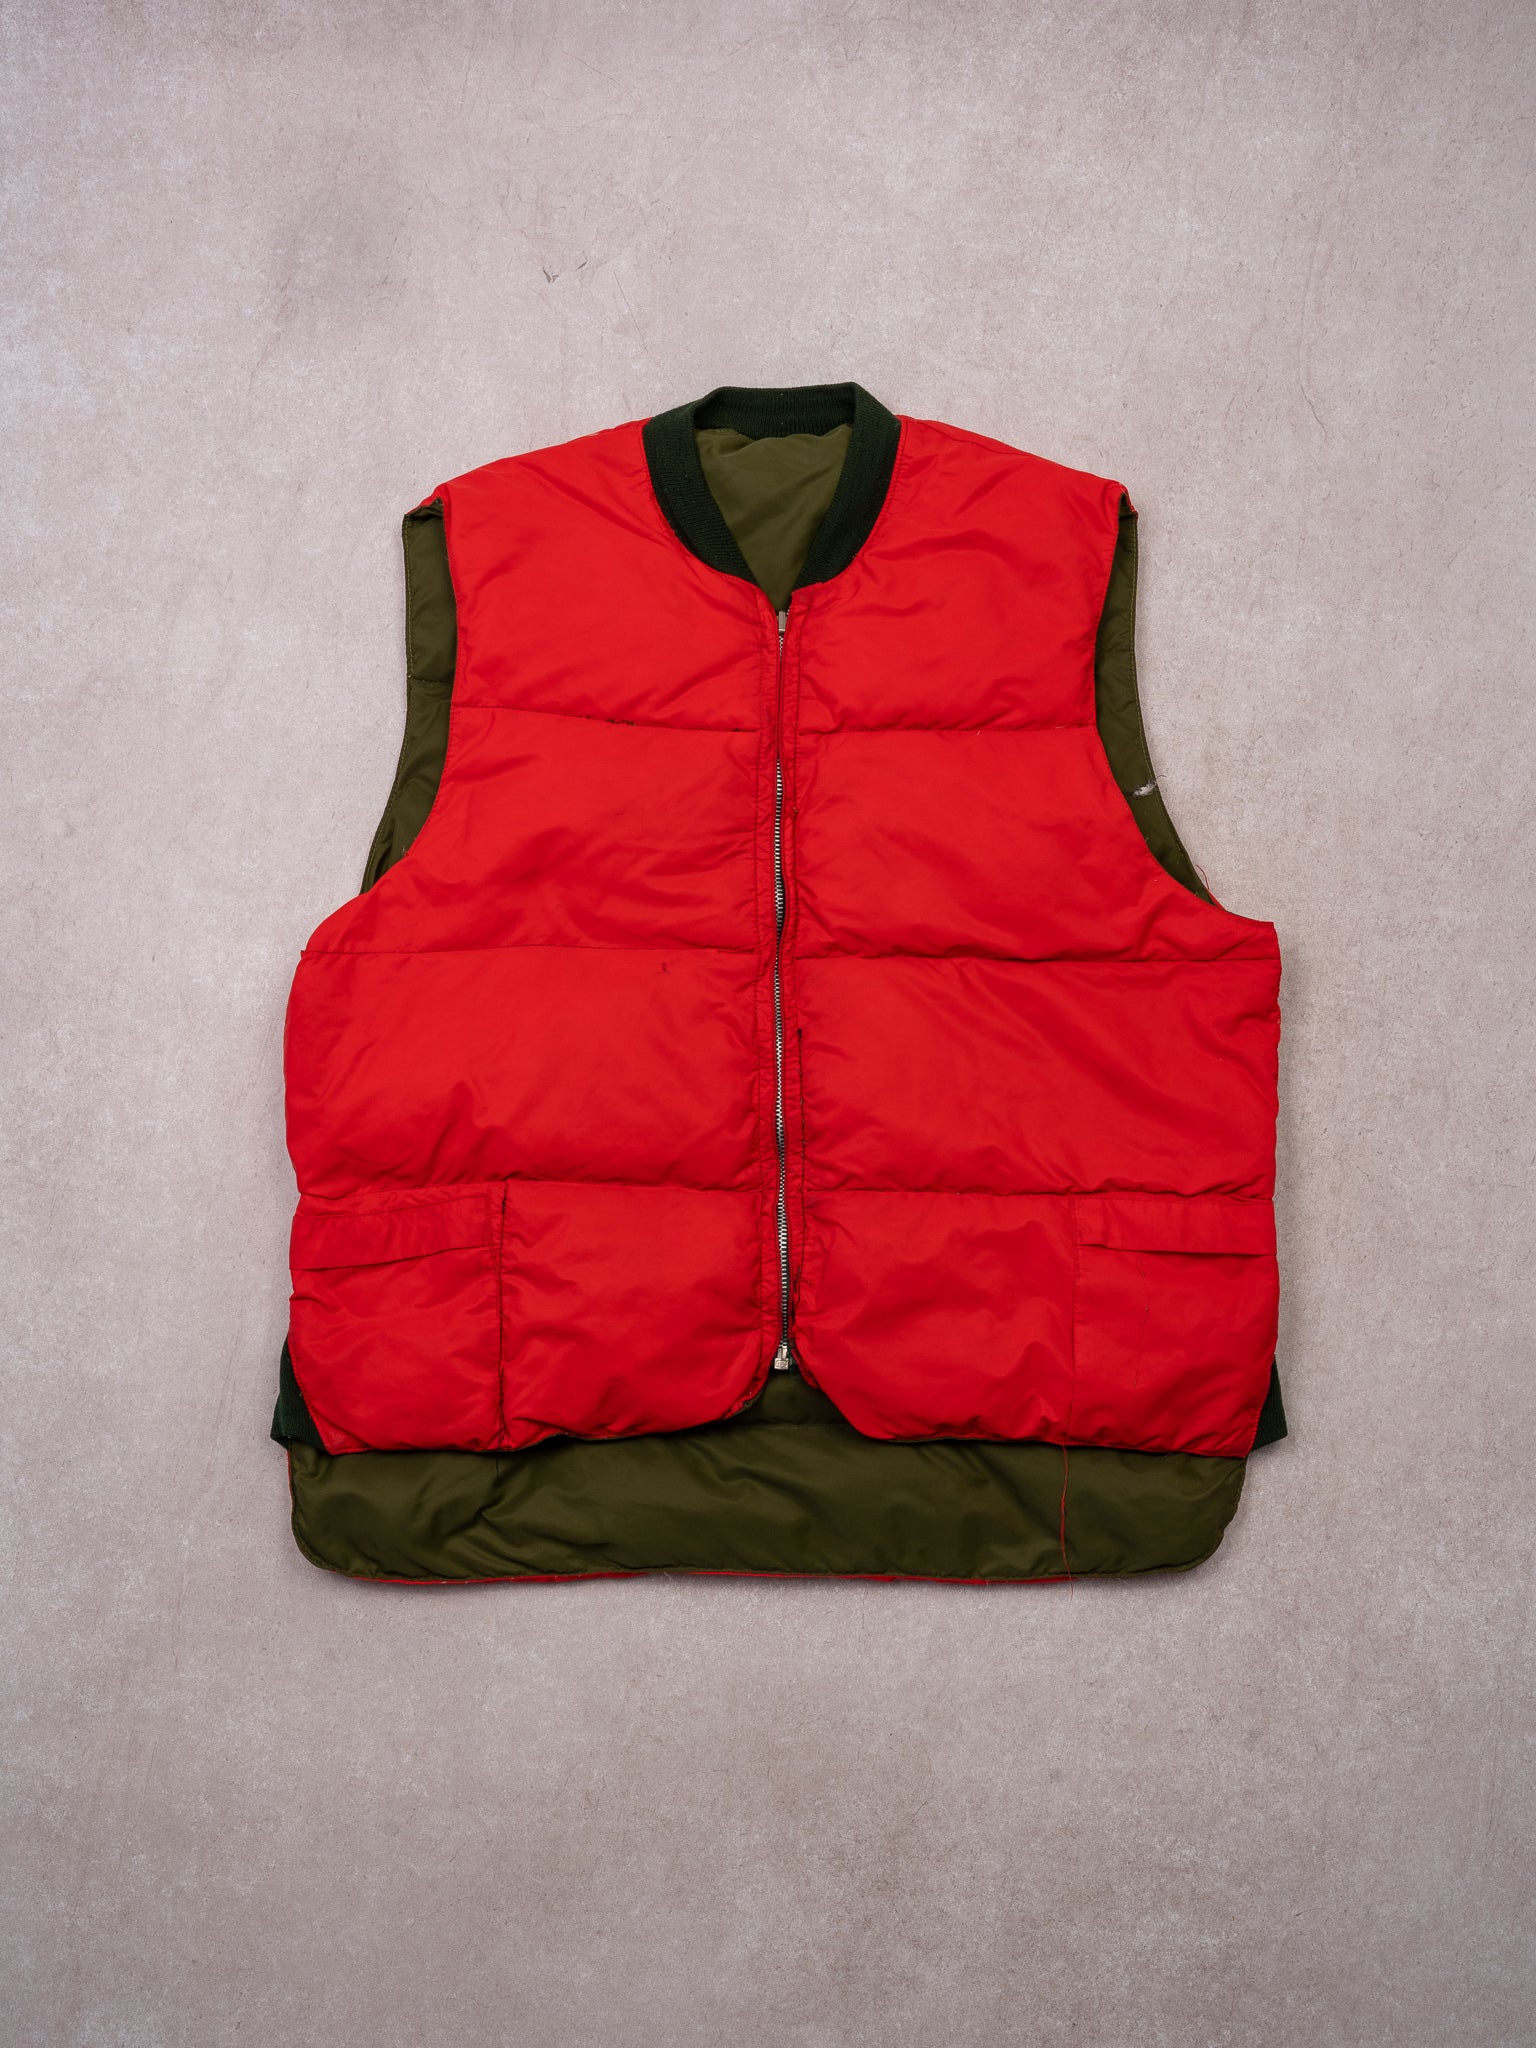 Vintage 80s Reversible Green + Red Puffer Vest (M/L)